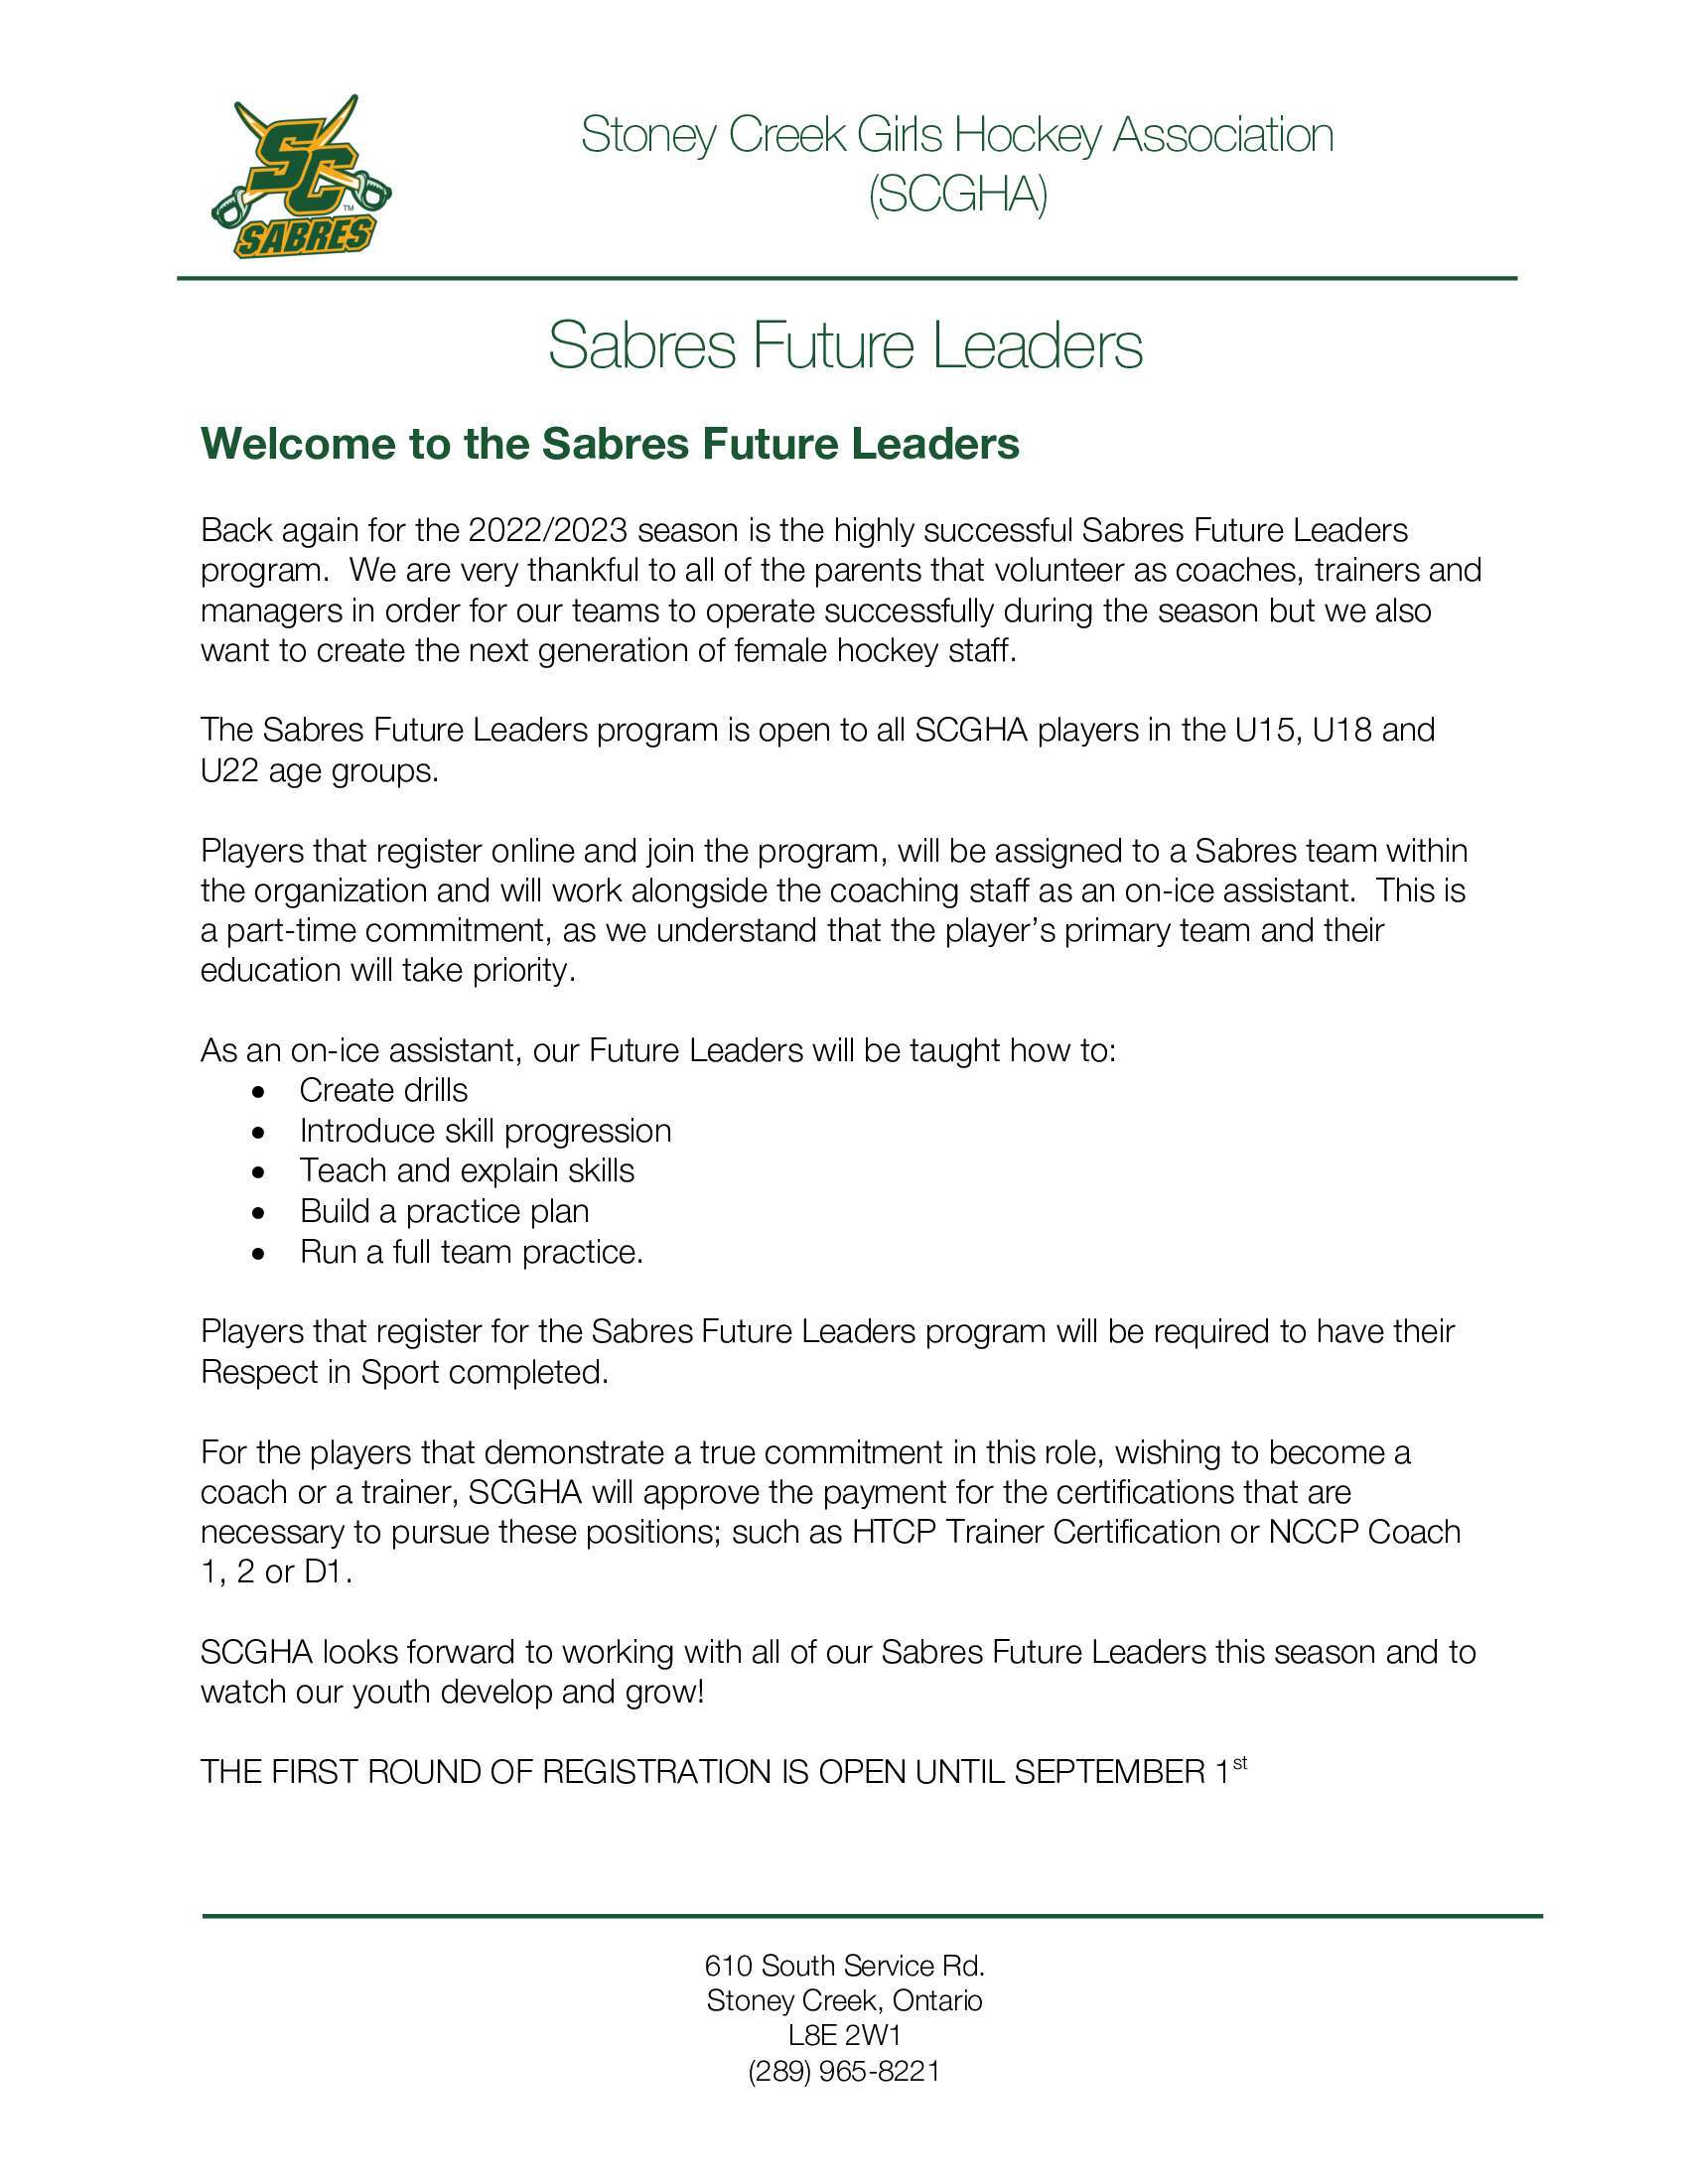 SCGHA-Future-Leaders-Announcement-2022-23.jpg